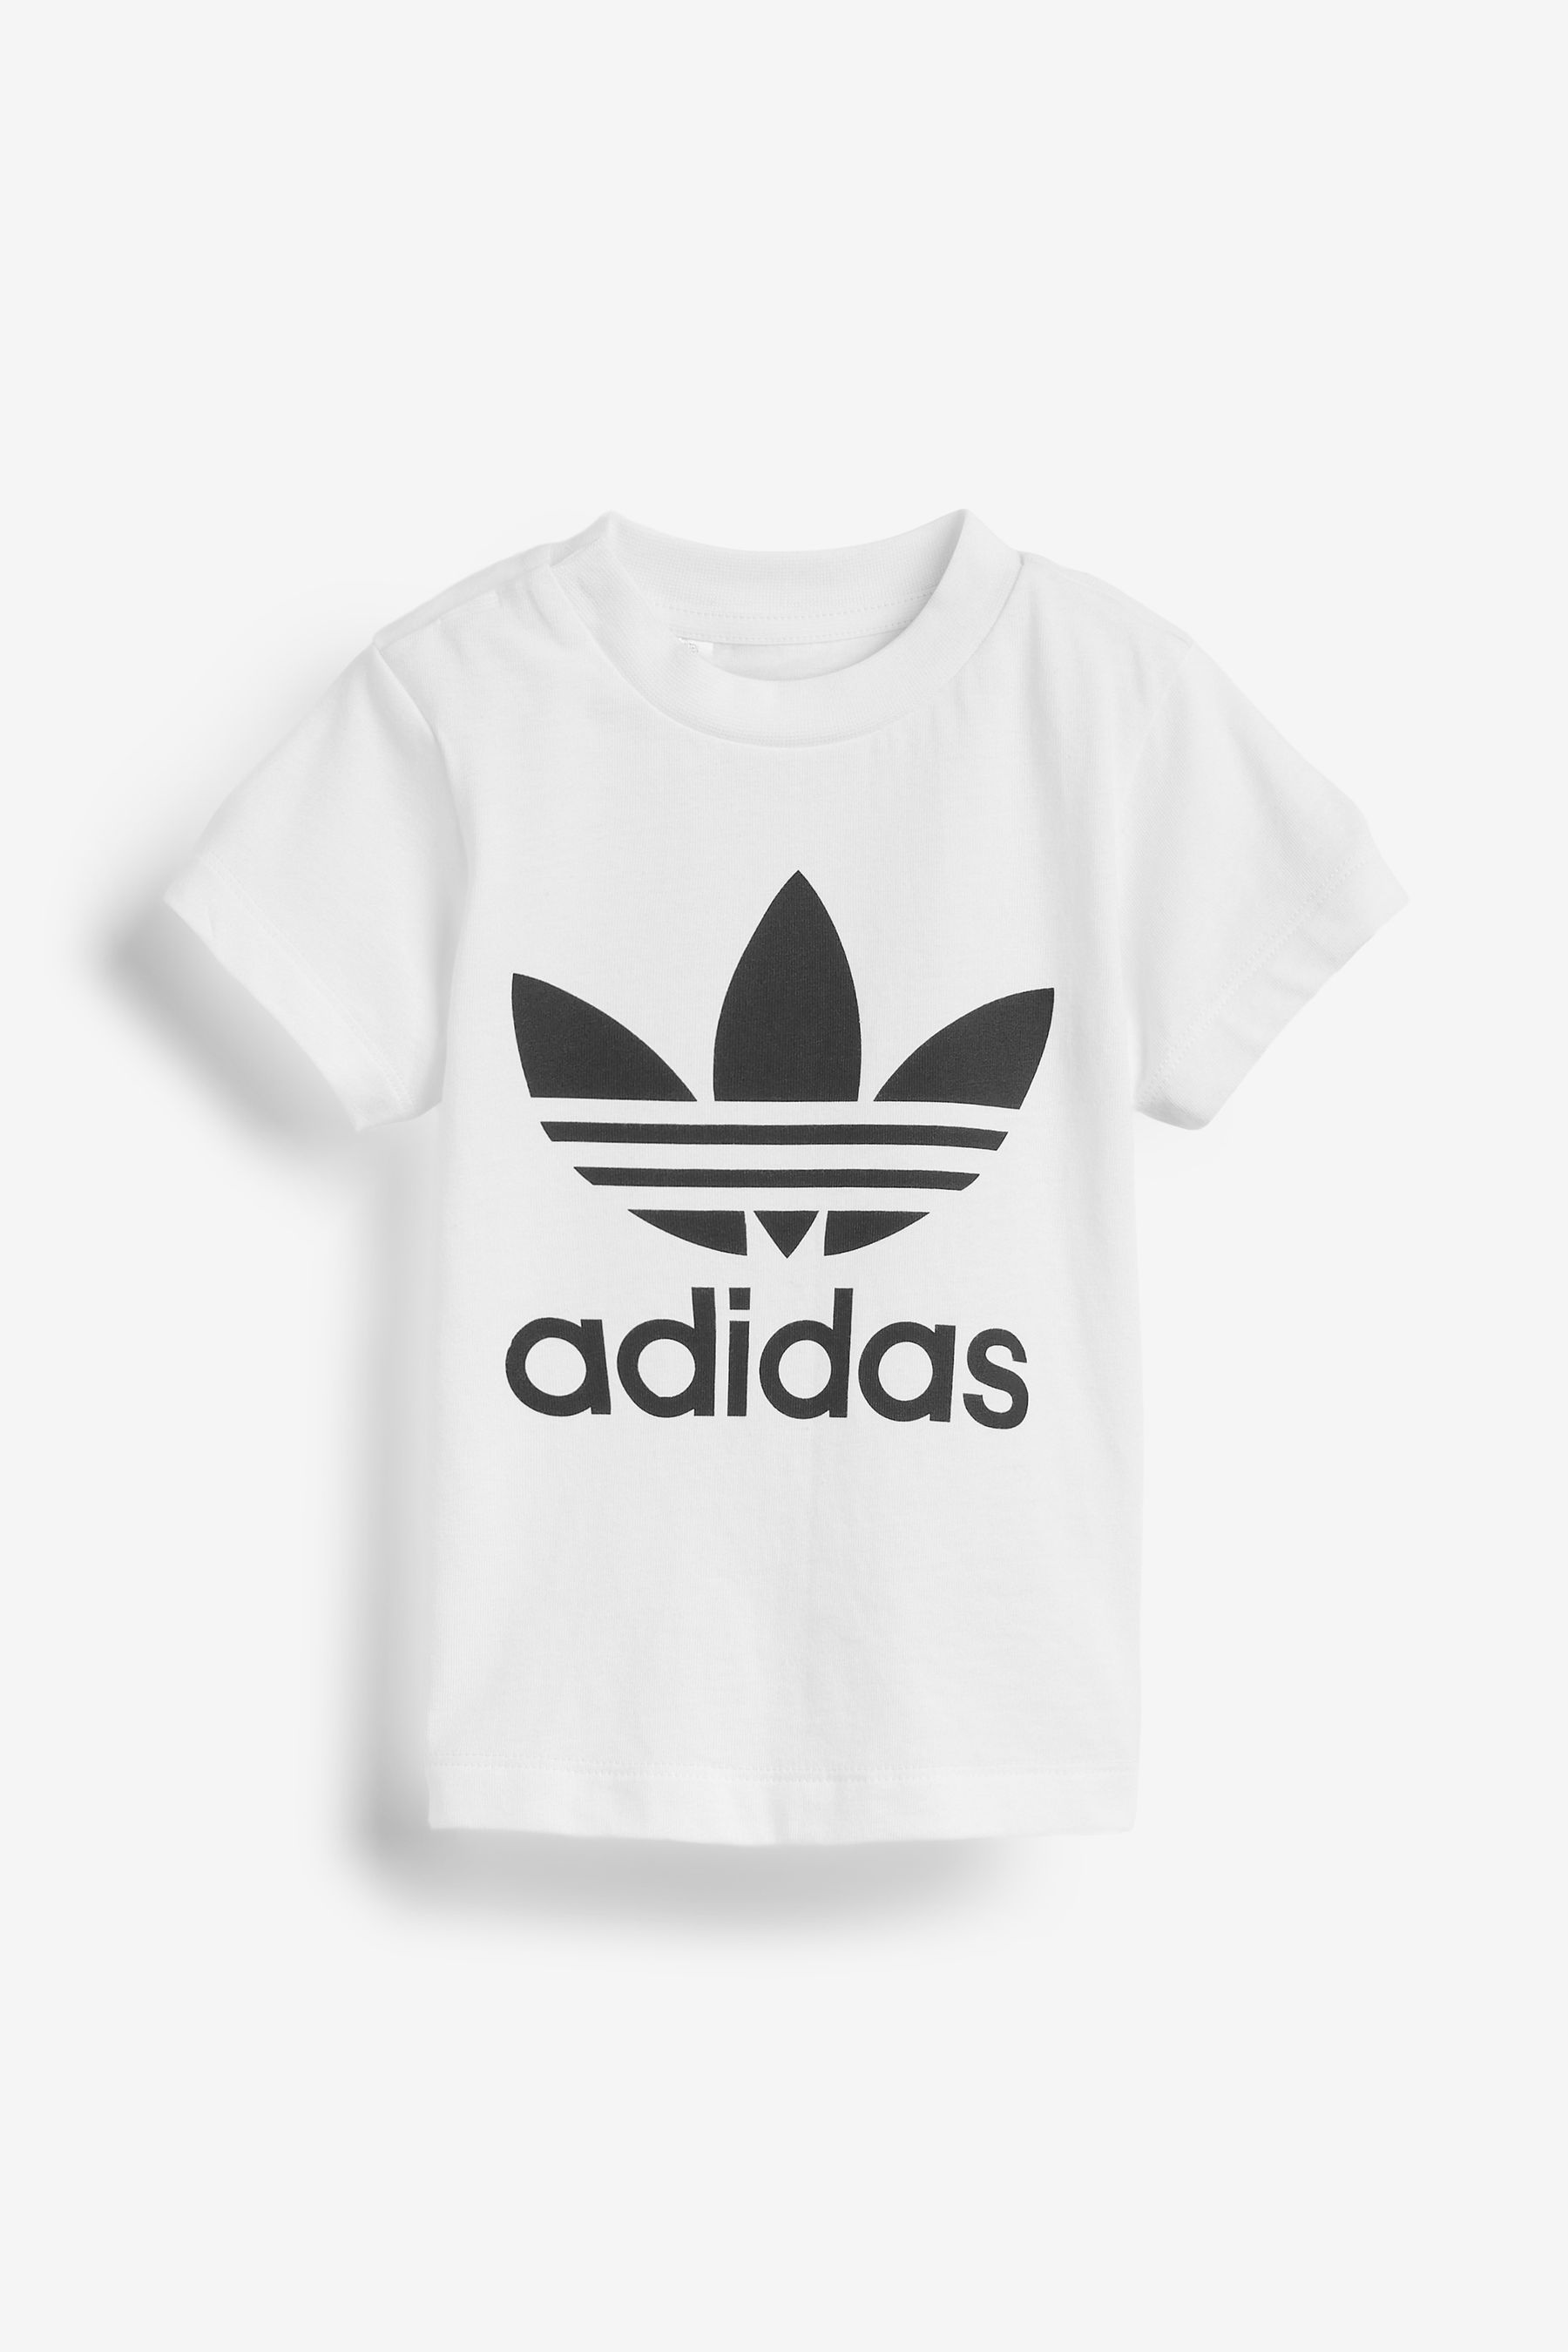 Buy adidas Originals Infant Trefoil T-Shirt from the Next UK online shop